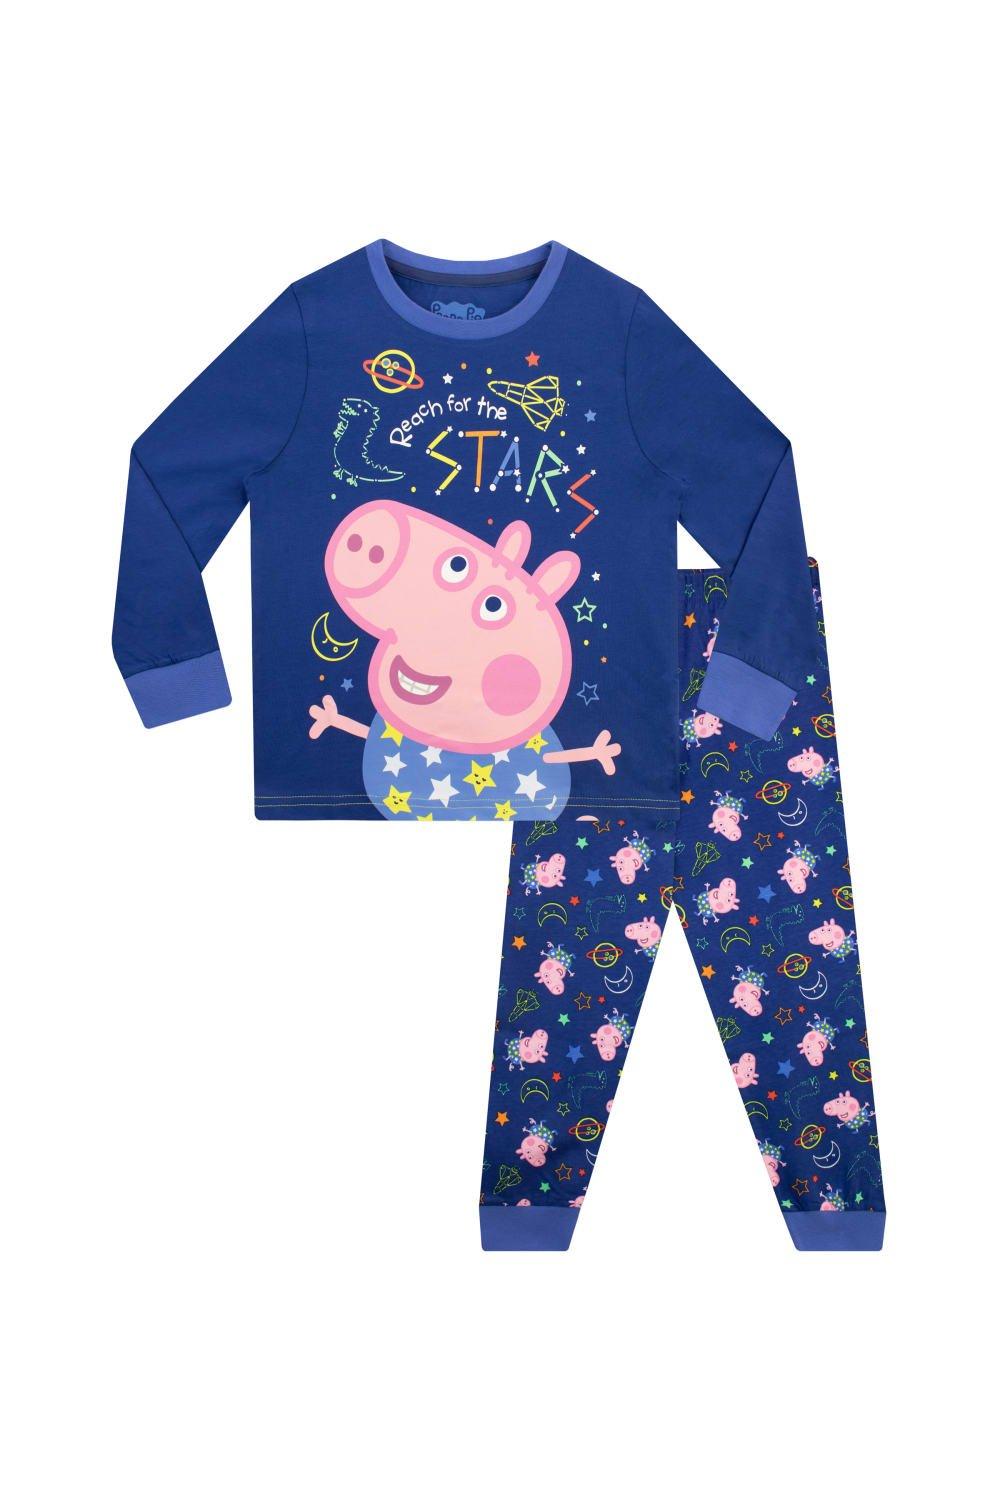 George Pig Reach For The Stars Pyjamas